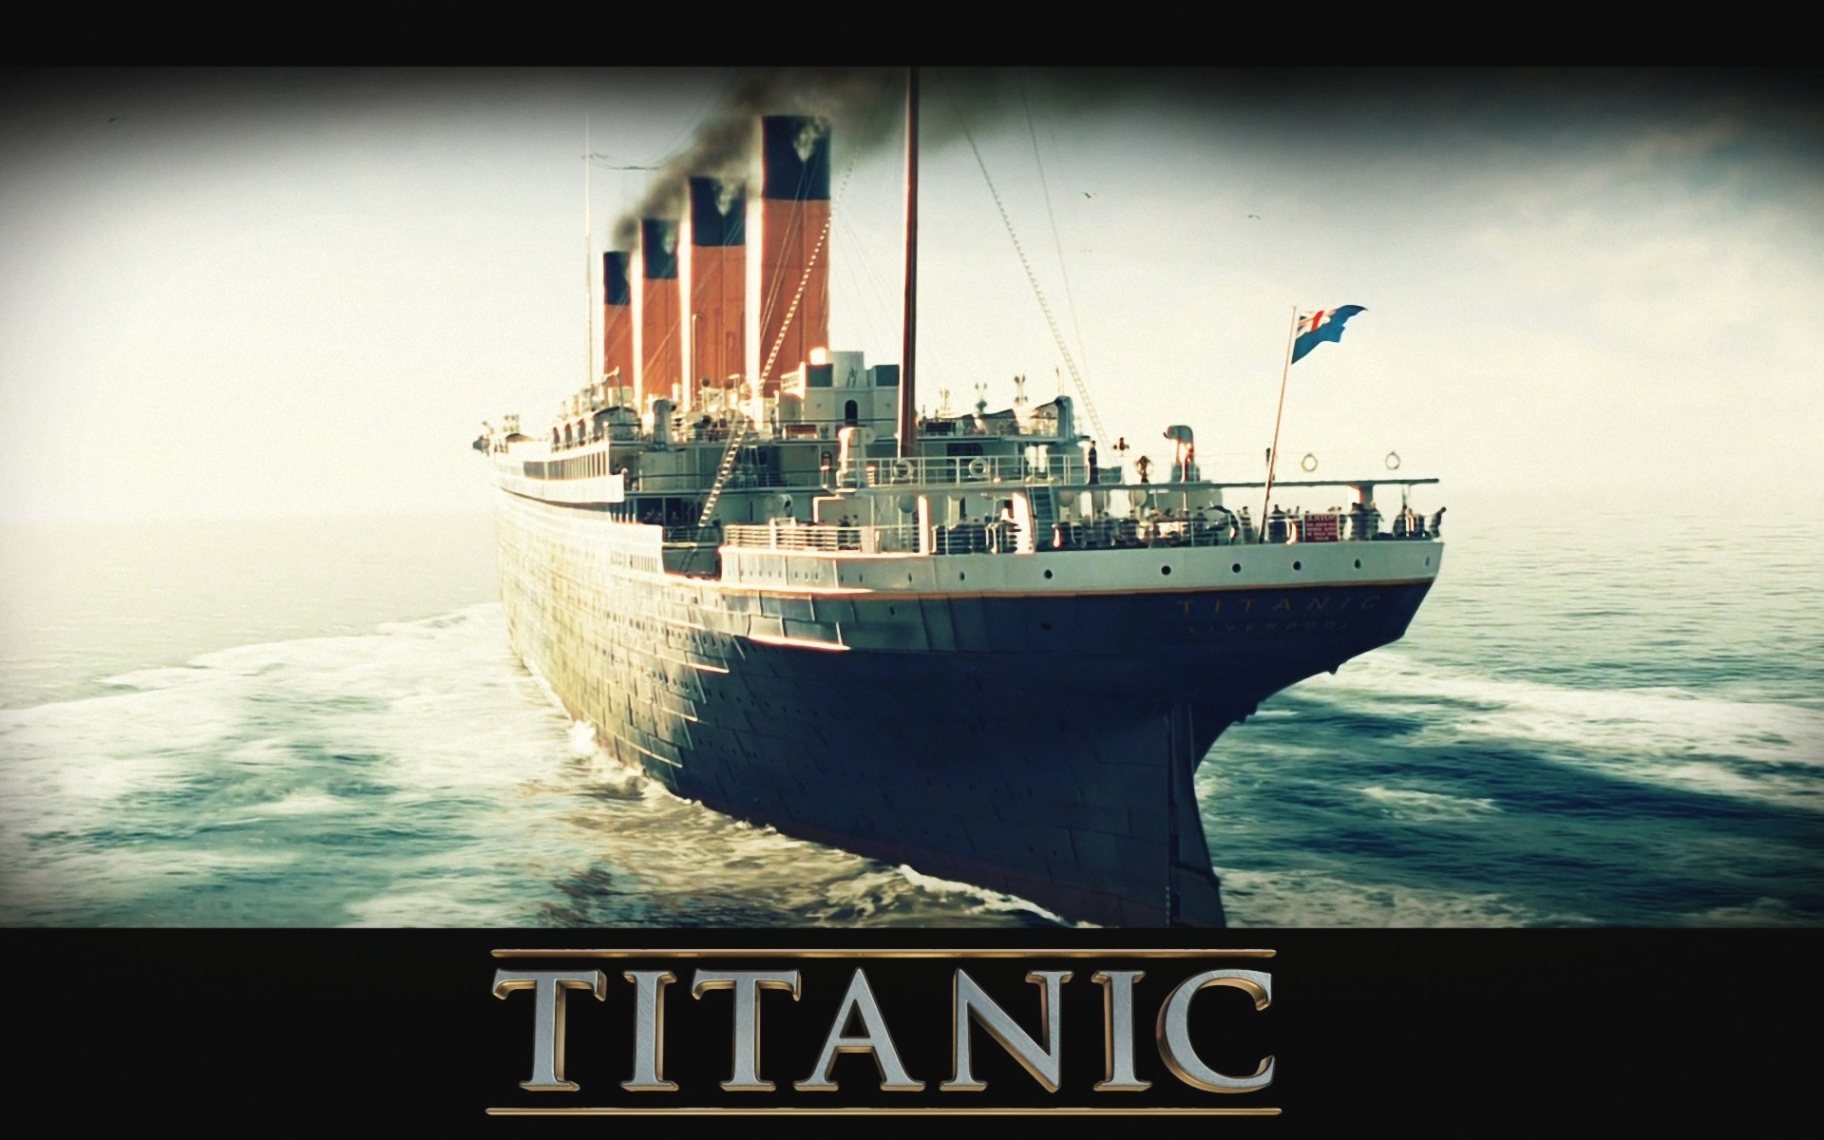 Hd Wallpapers Widescreen 1080p 3d - Titanic 3d Wallpaper Hd - HD Wallpaper 